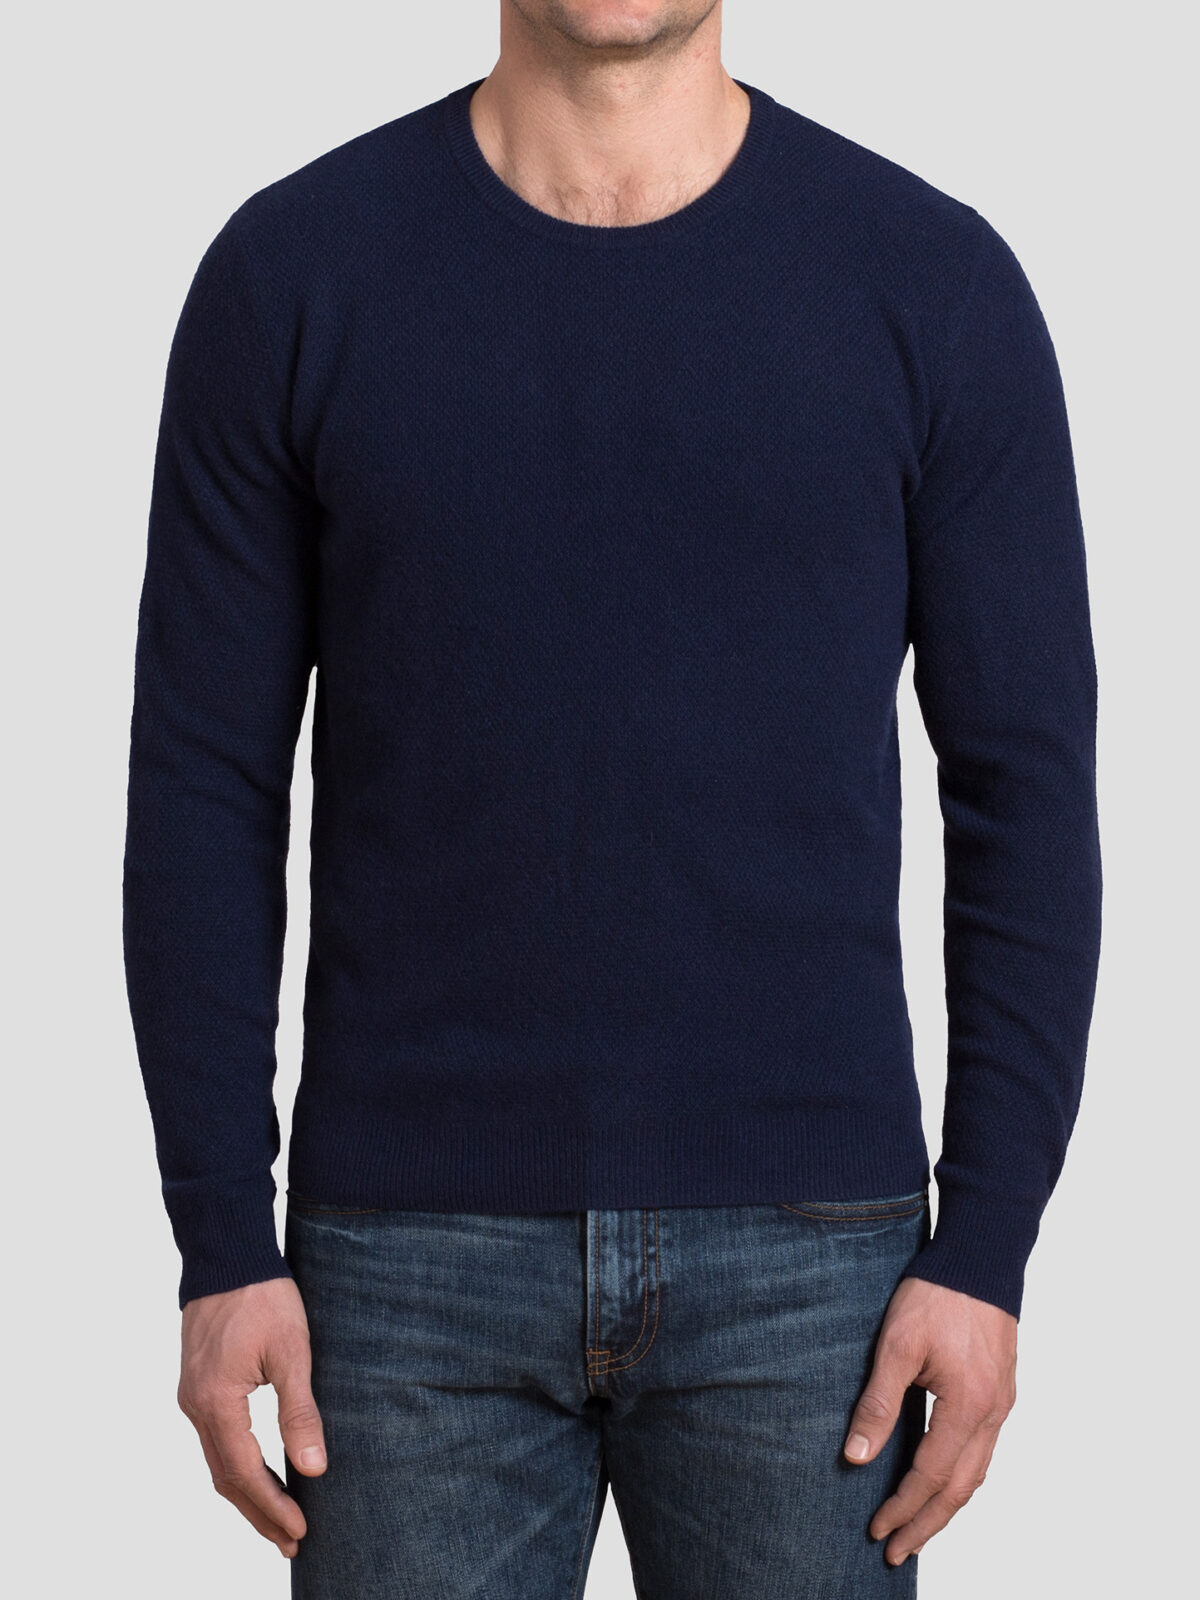 Navy Cobble Stitch Cashmere Crewneck Sweater